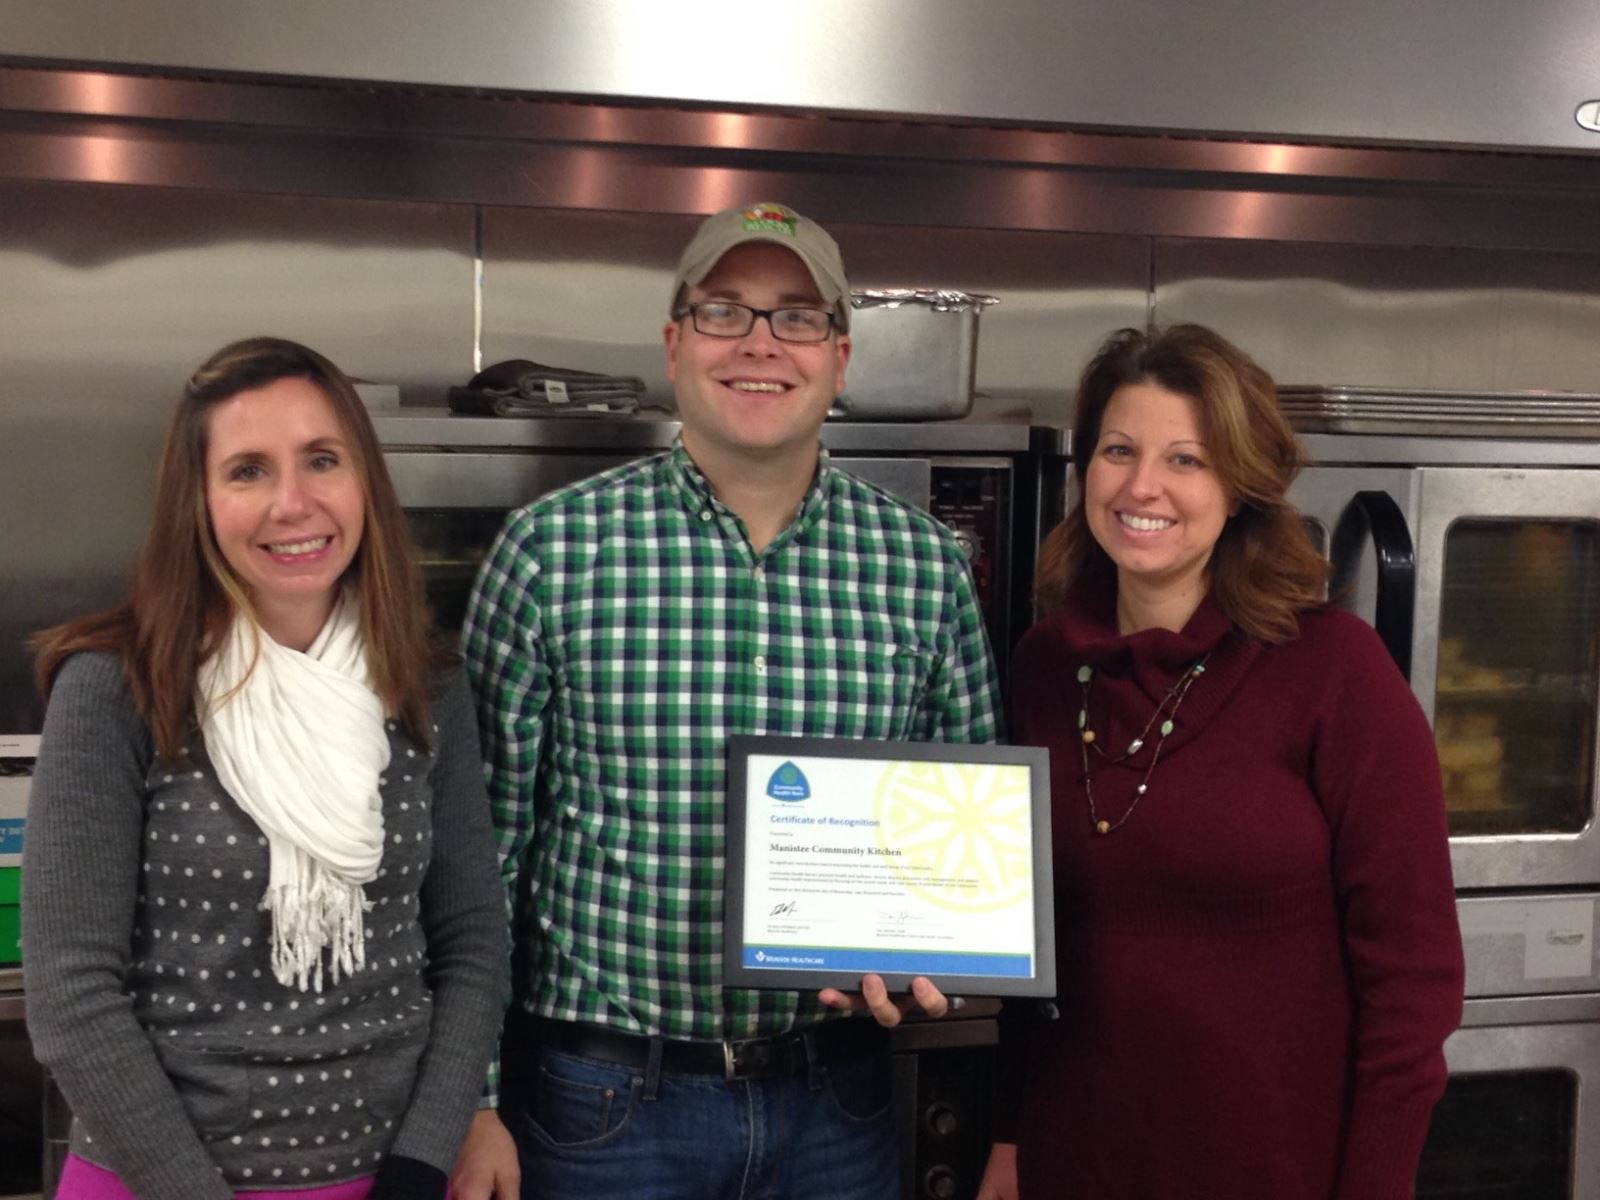 Manistee Community Kitchen receives award